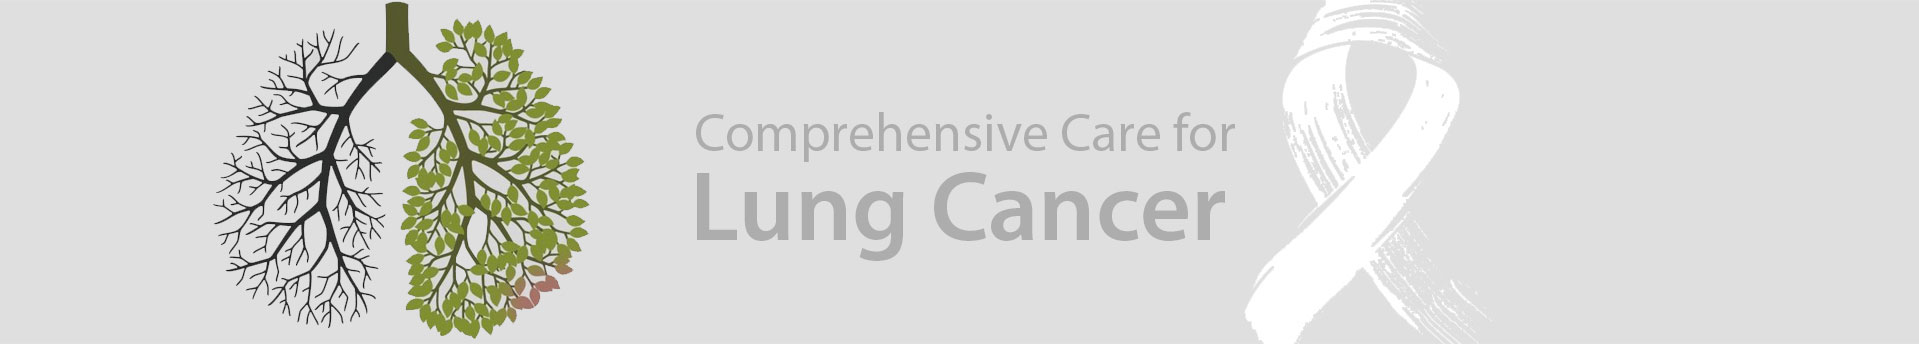 Lung Cancer Banner